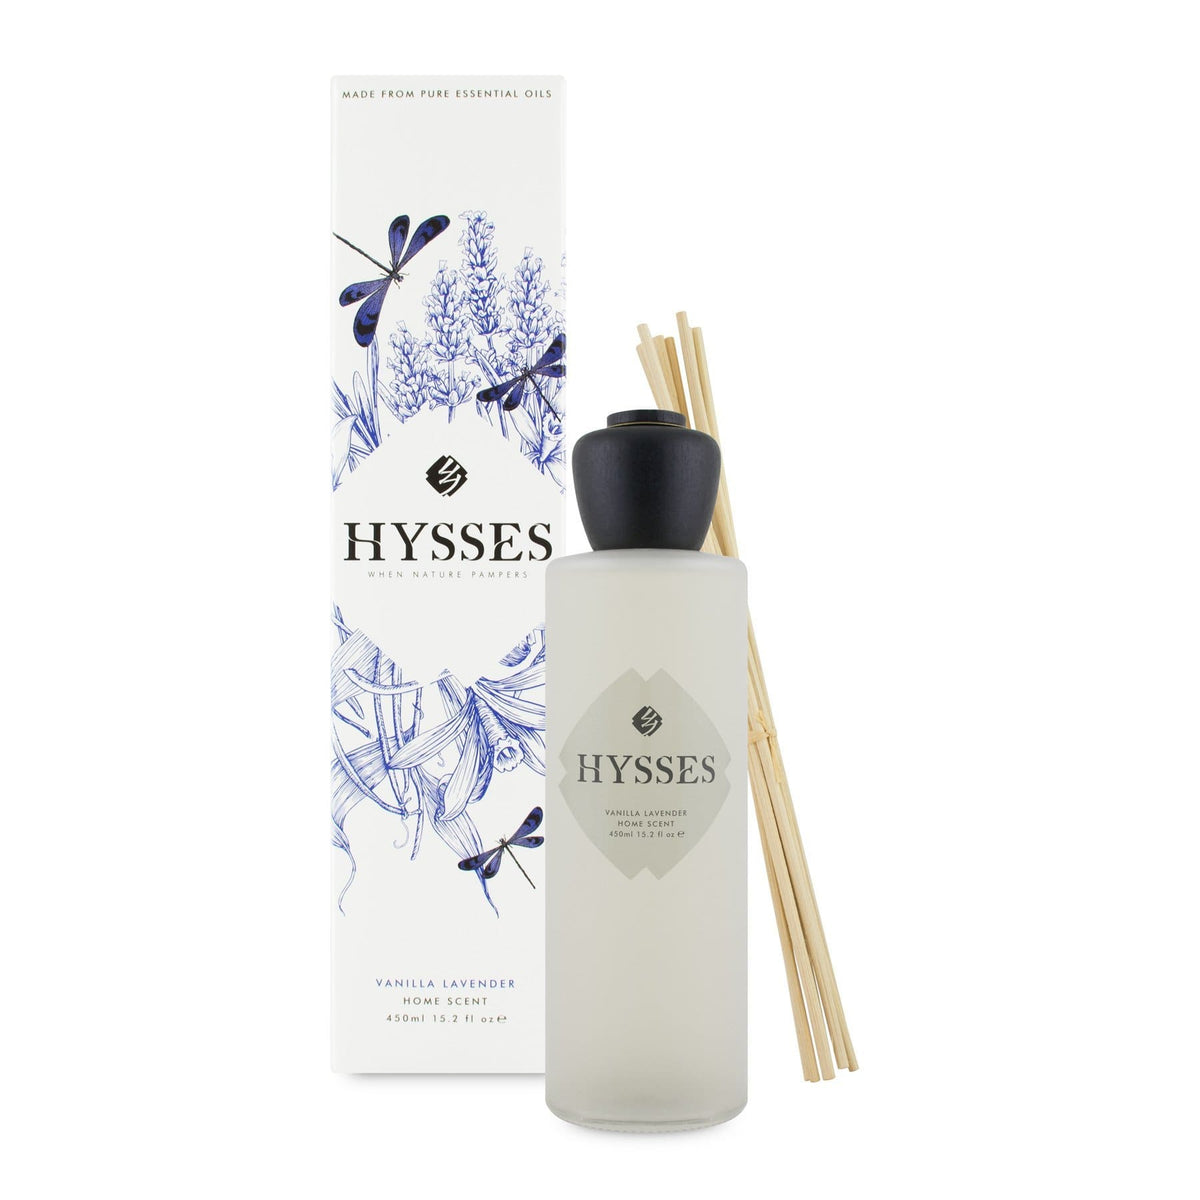 Hysses Home Scents 450ml Home Scent Reed Diffuser Vanilla Lavender